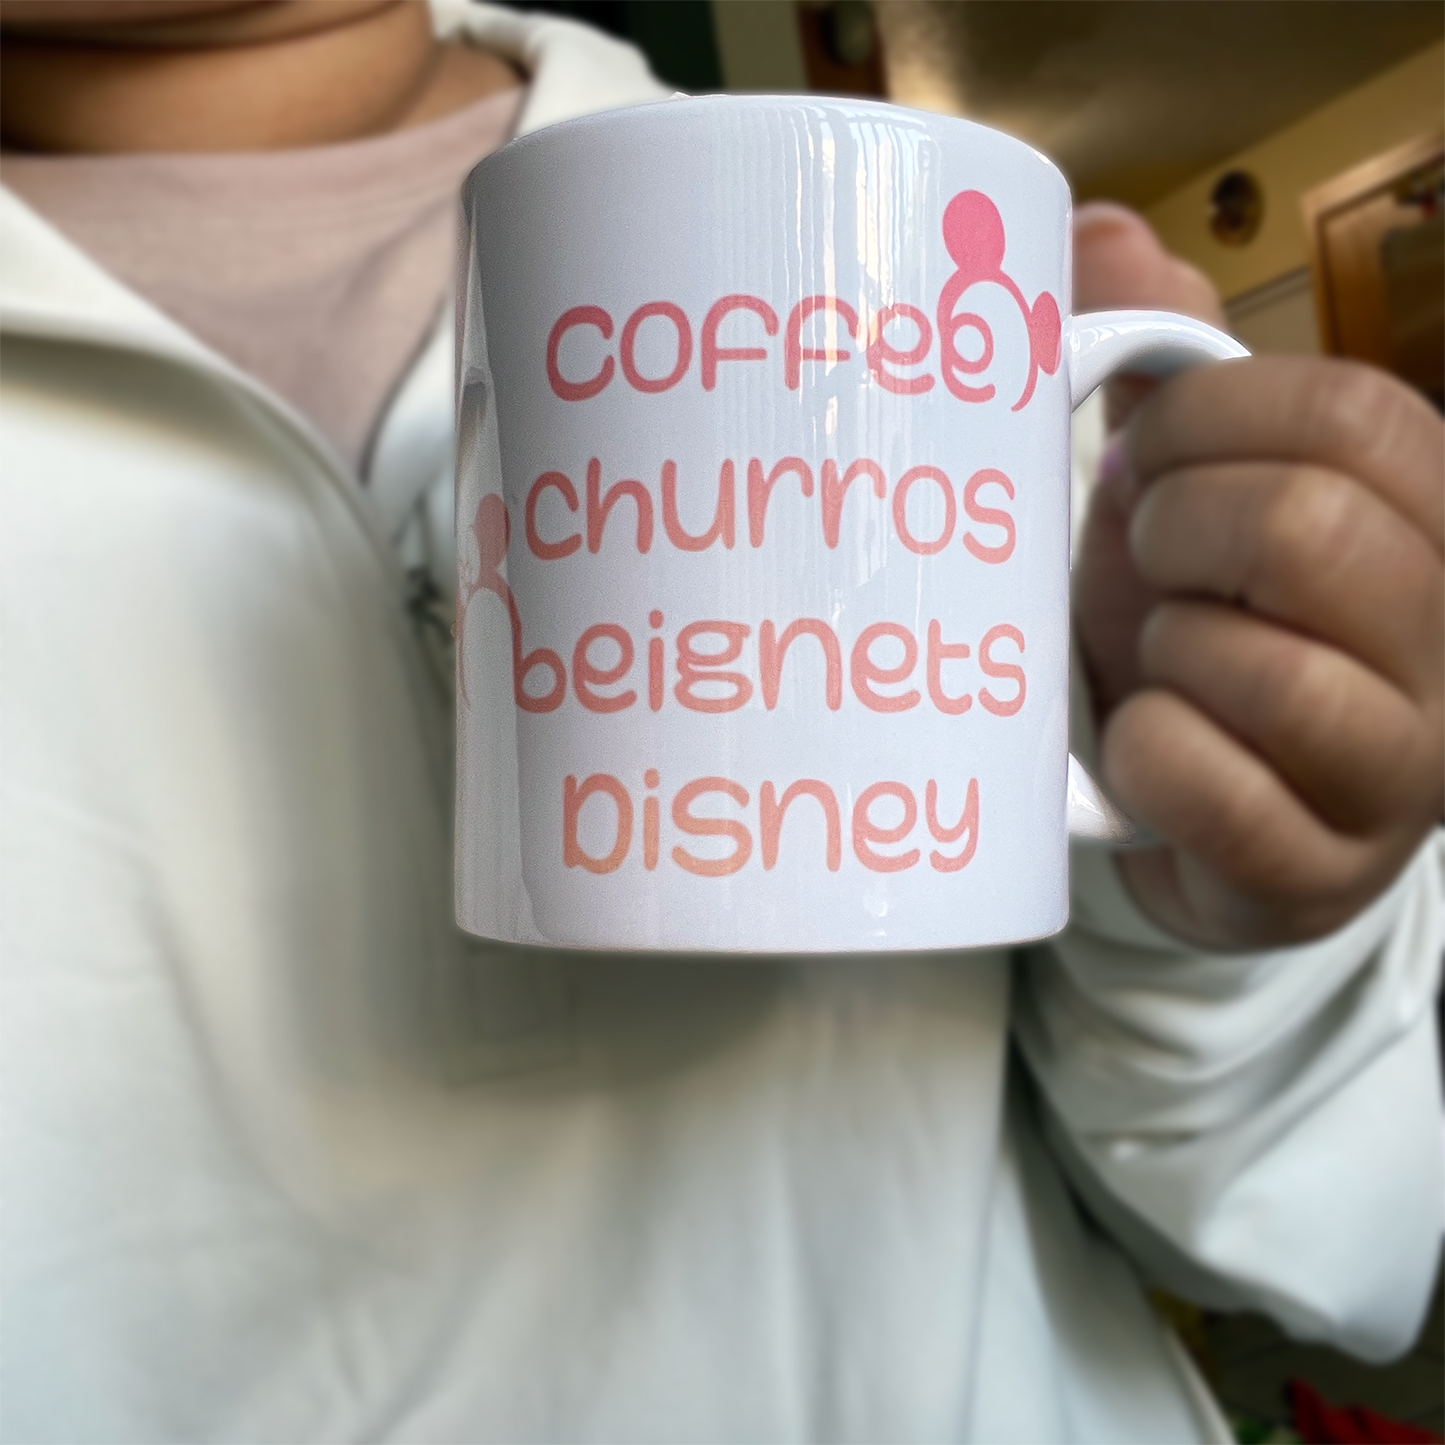 I'd Rather Be At Disney Churro Coffee Beignets Snacks Printed Ceramic Coffee Mug Cup